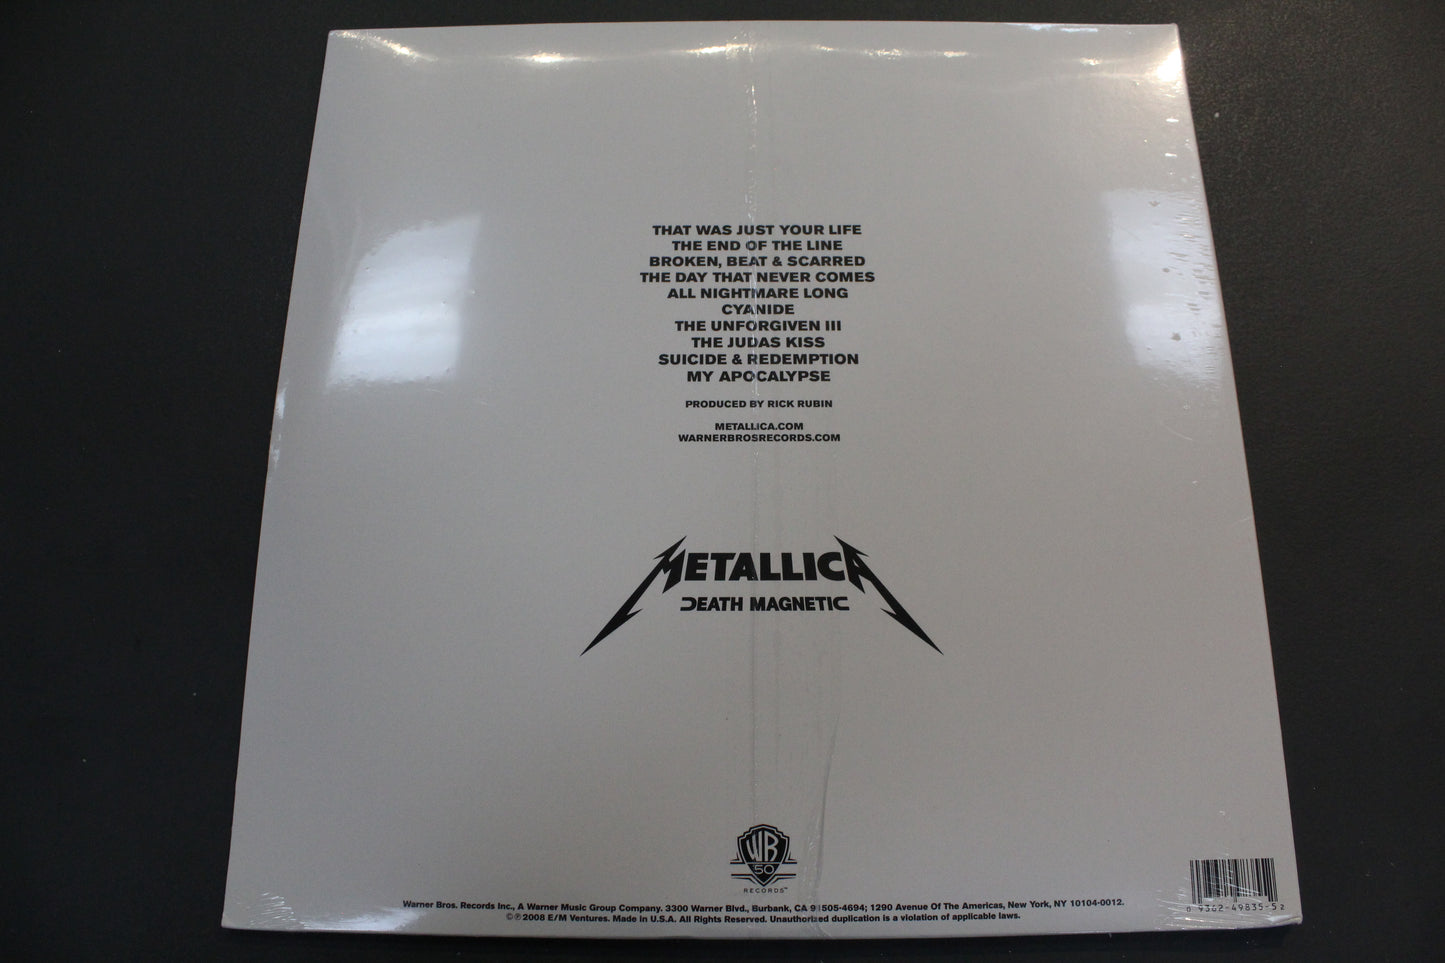 Metallica Death Magnetic Vinyl record (Sealed)